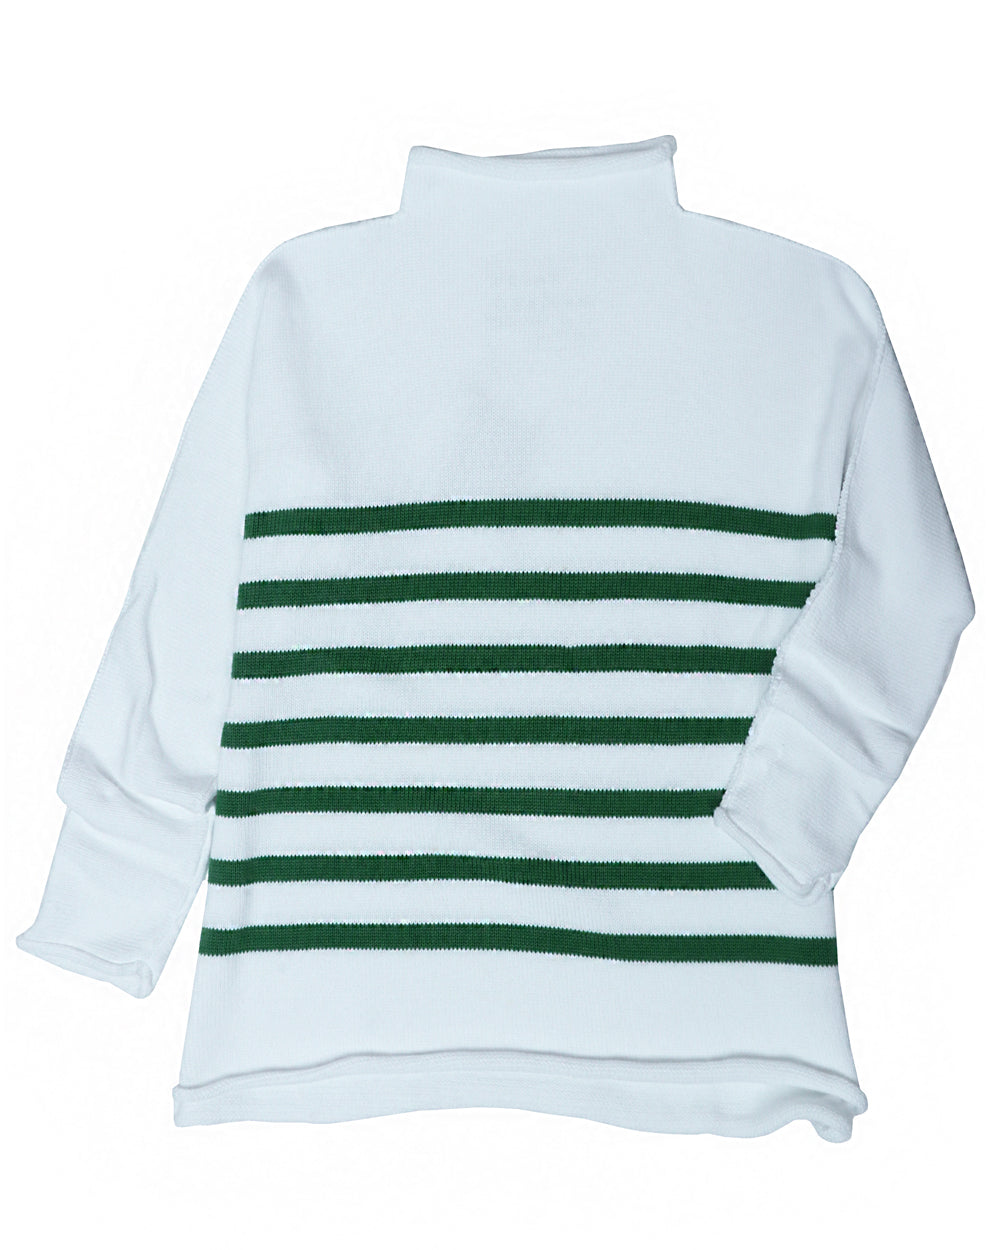 White and Clover Stripe Monterey Sweater